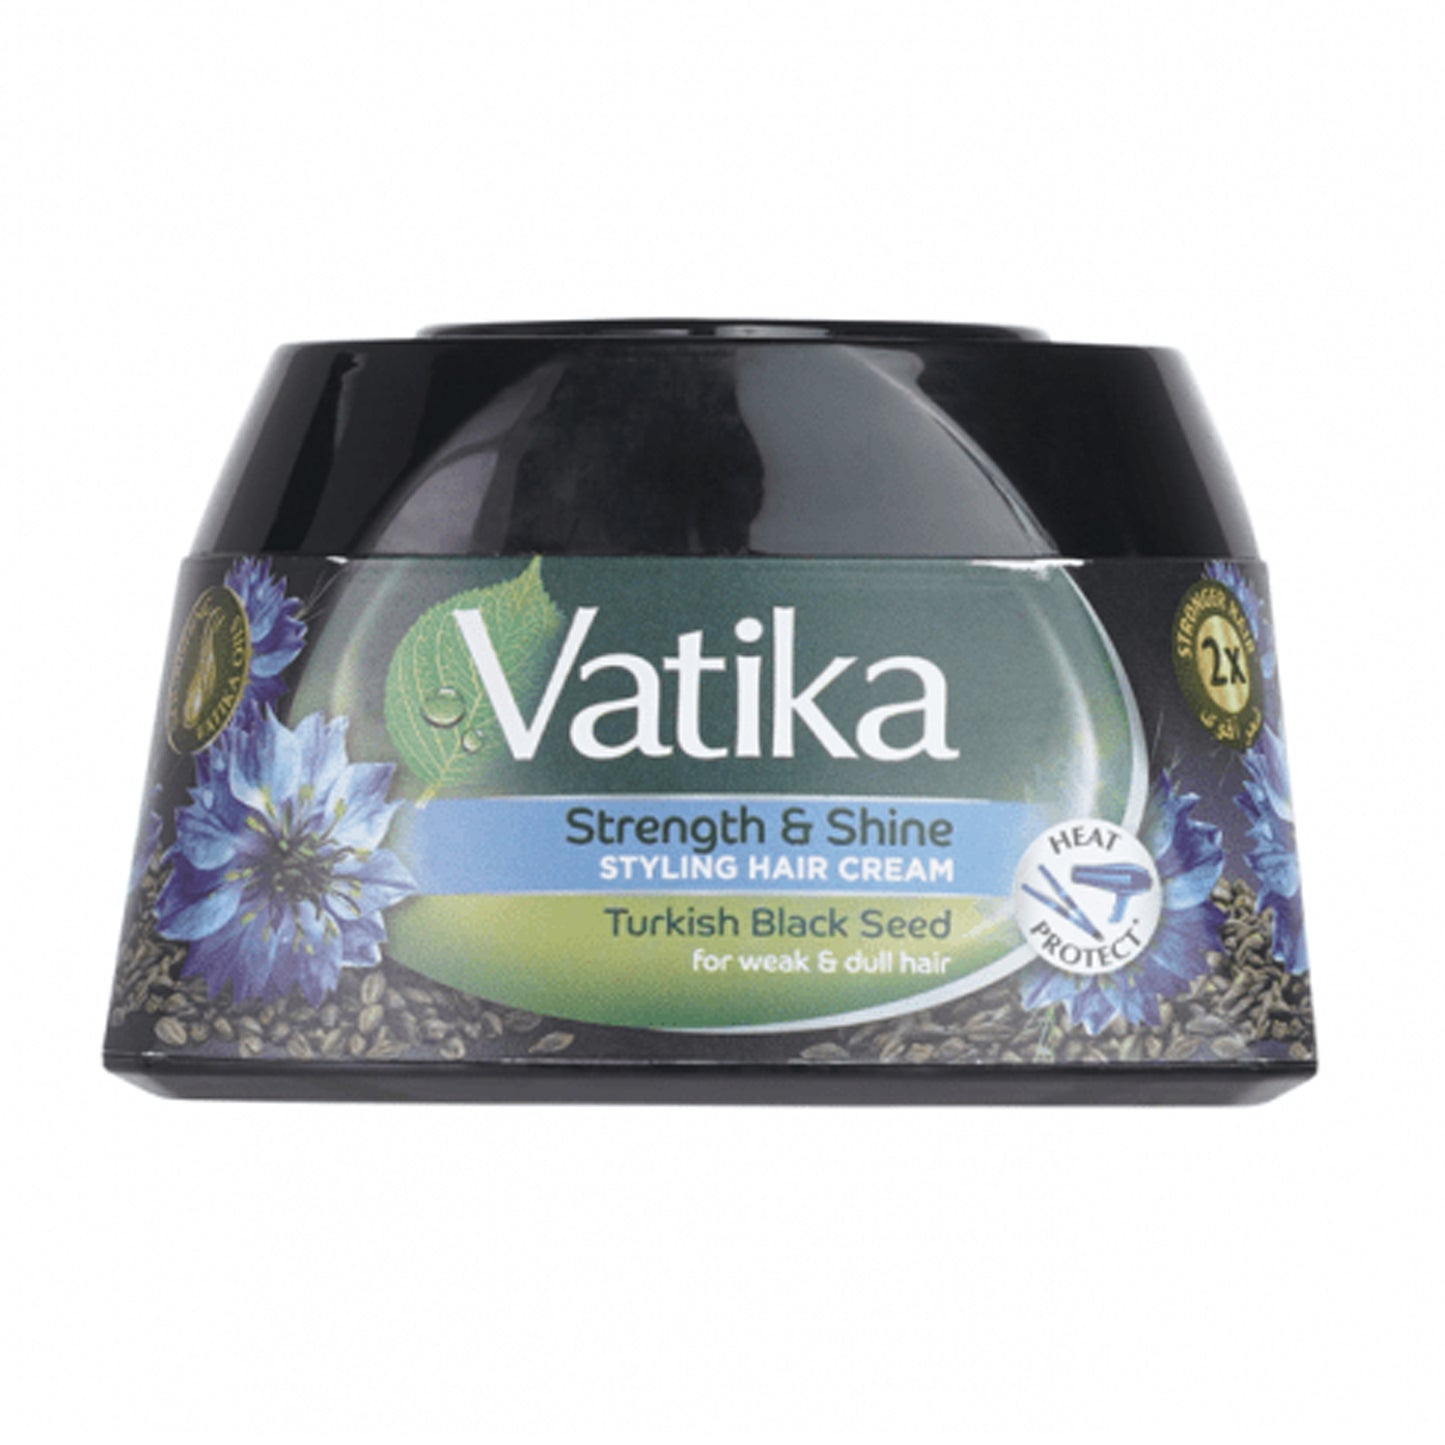 VATIKA - STRENGTH & SHINE STYLING HAIR CREAM WITH TURKISH BLACK SEED - 140ML